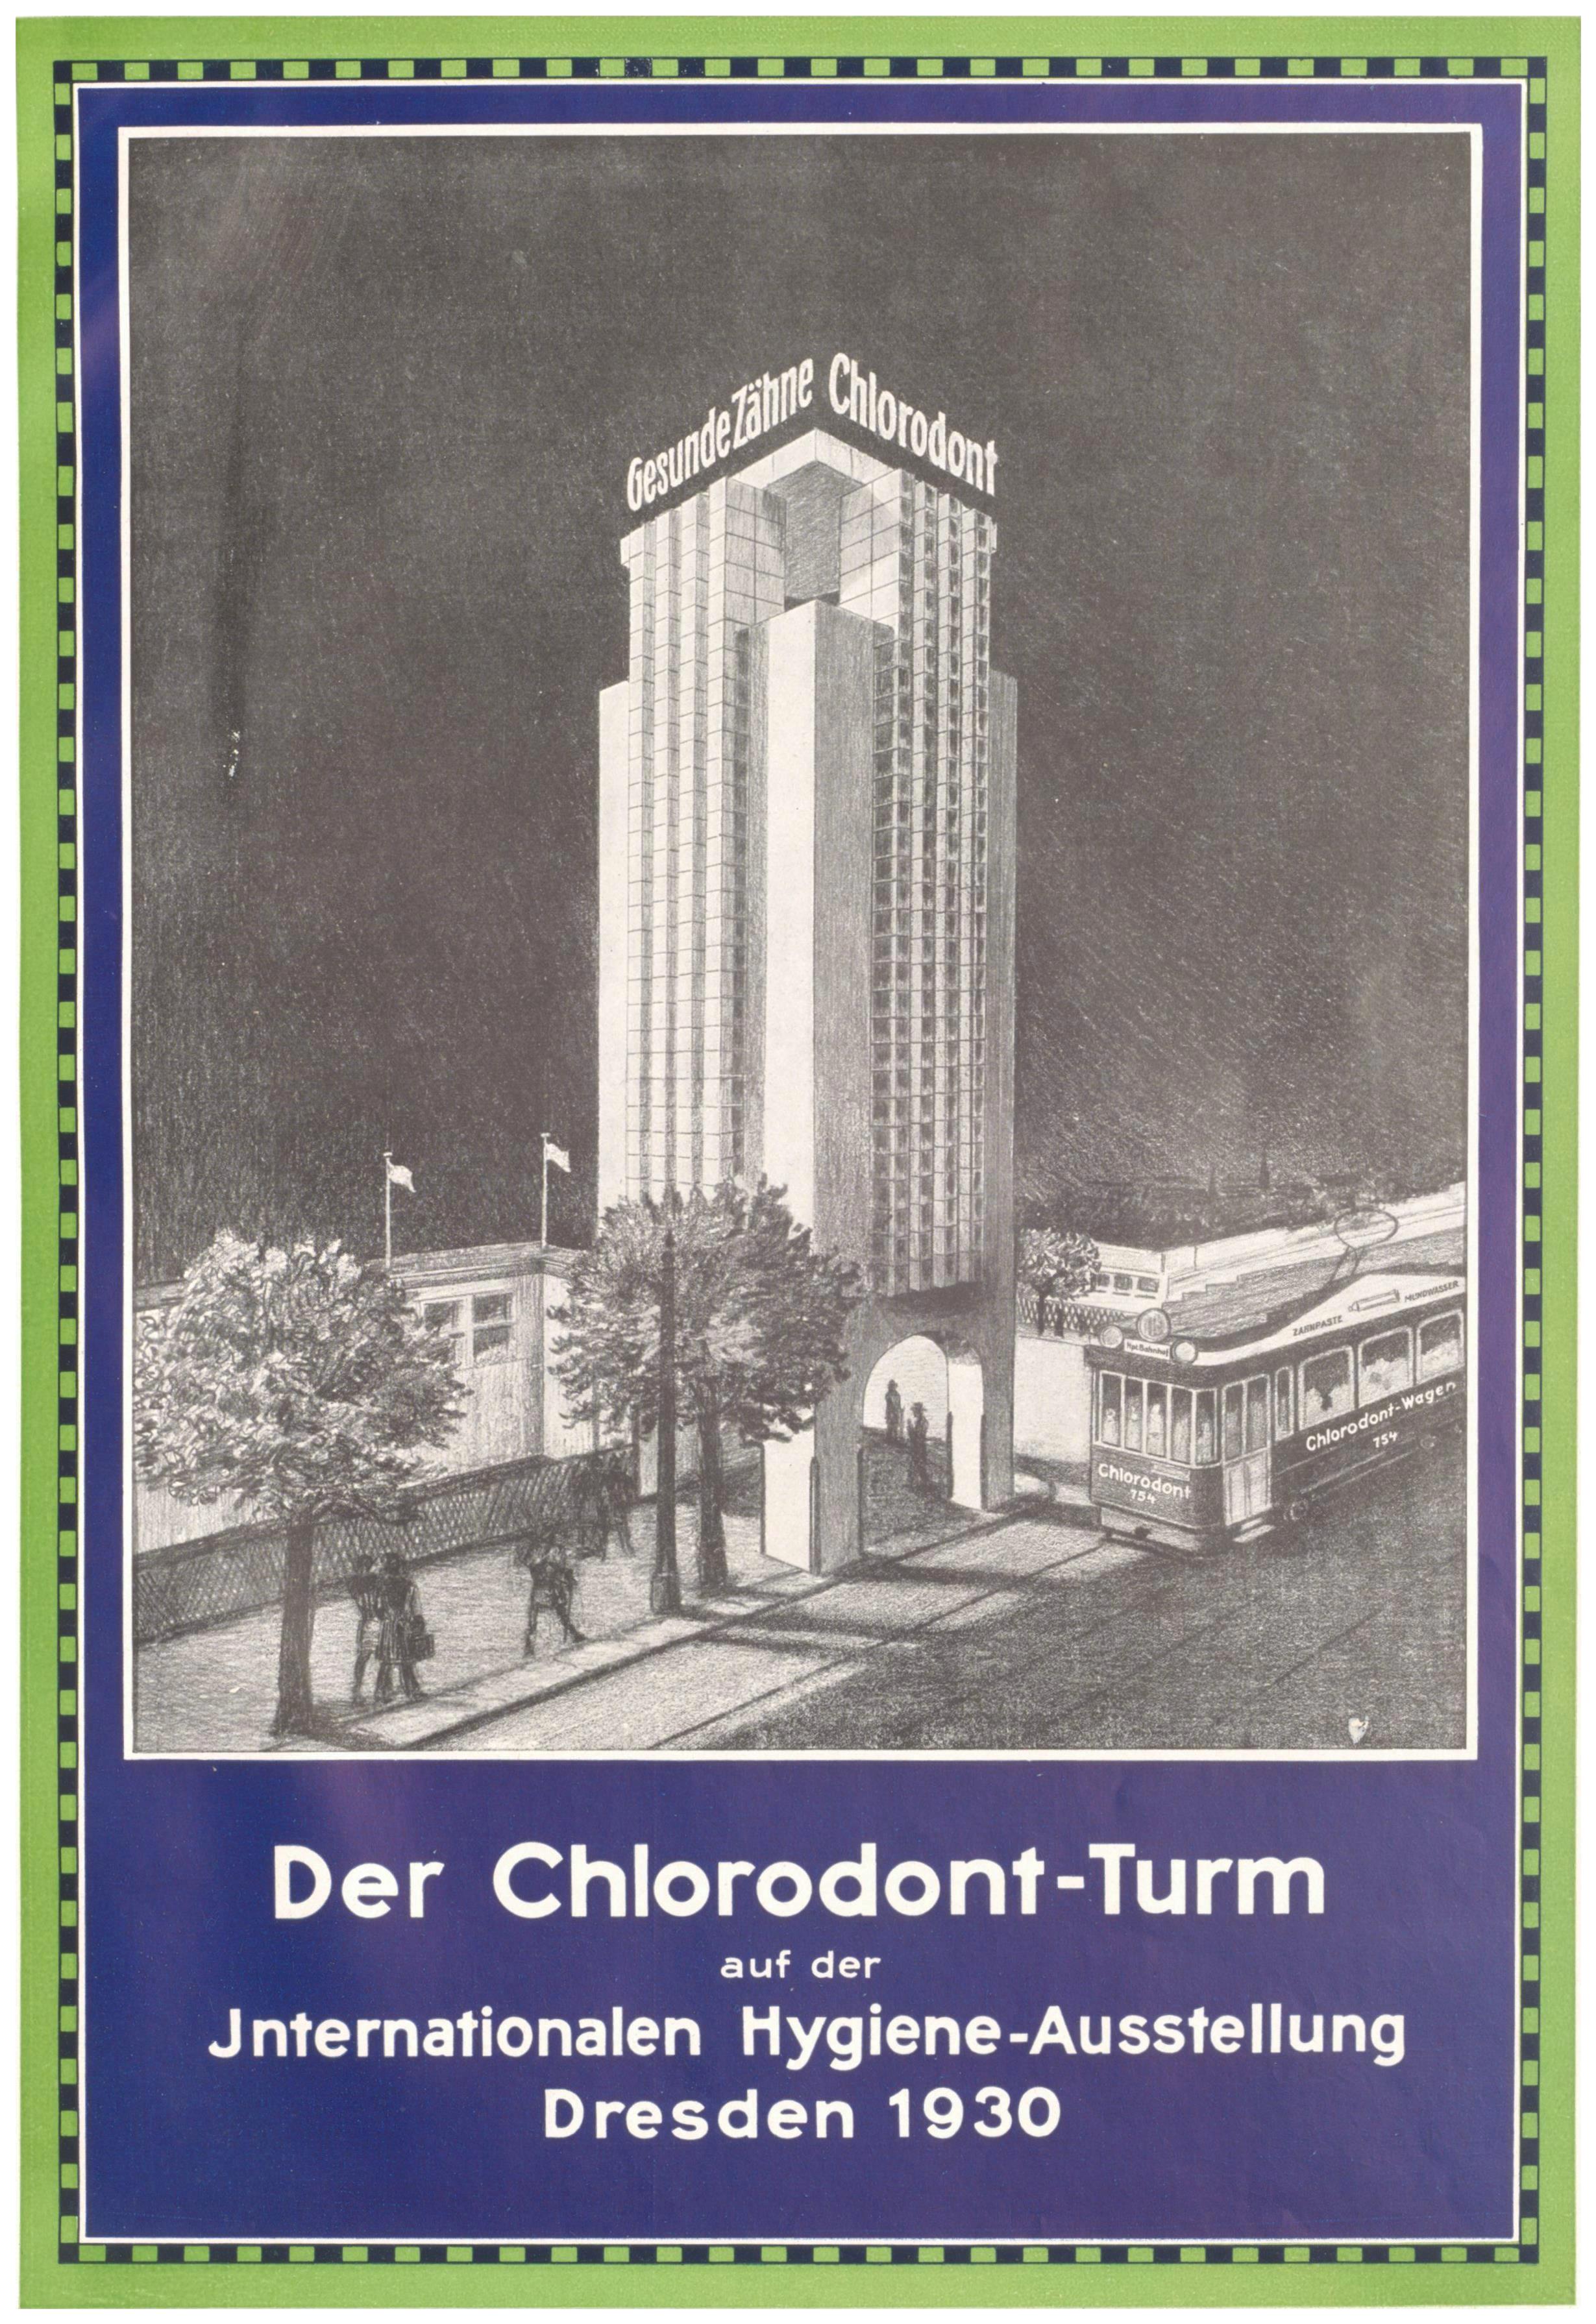 Chlorodont 1930 4.jpg